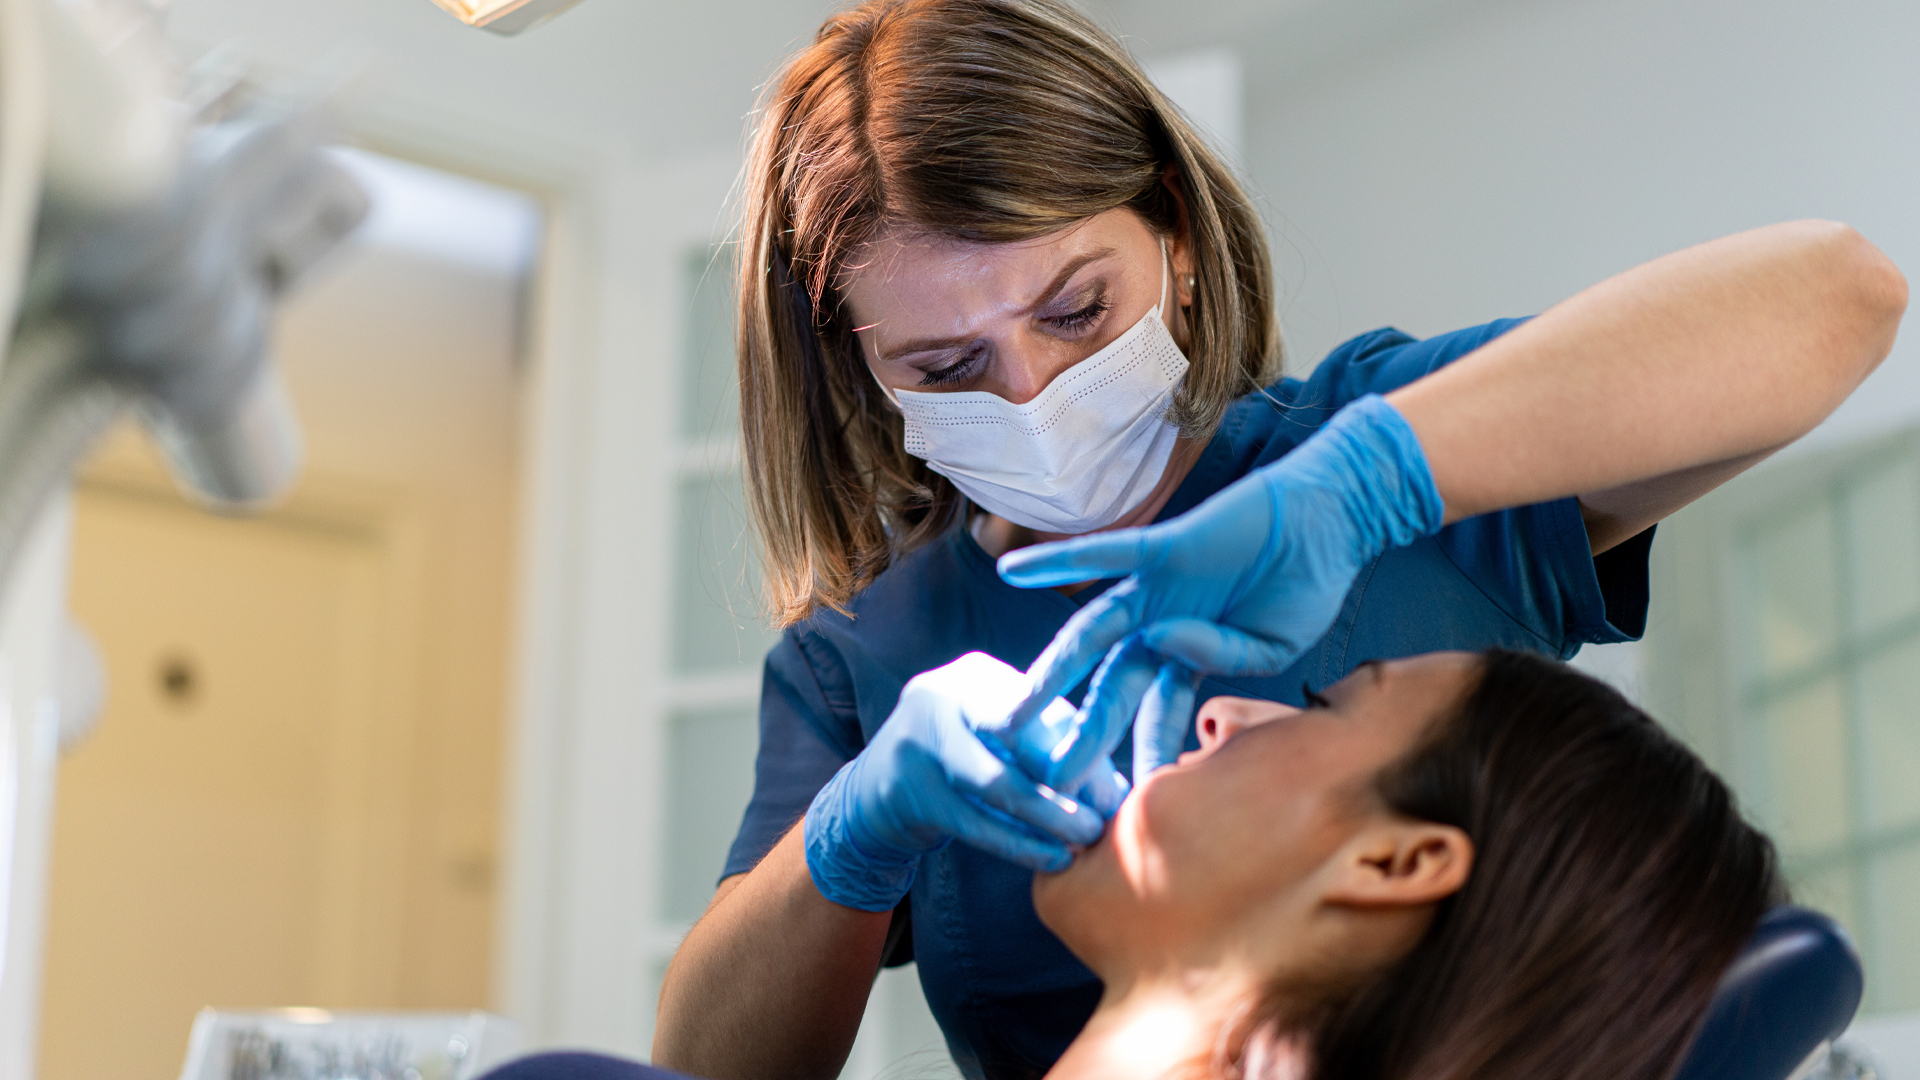 The federal dental plan may fall short of expectations